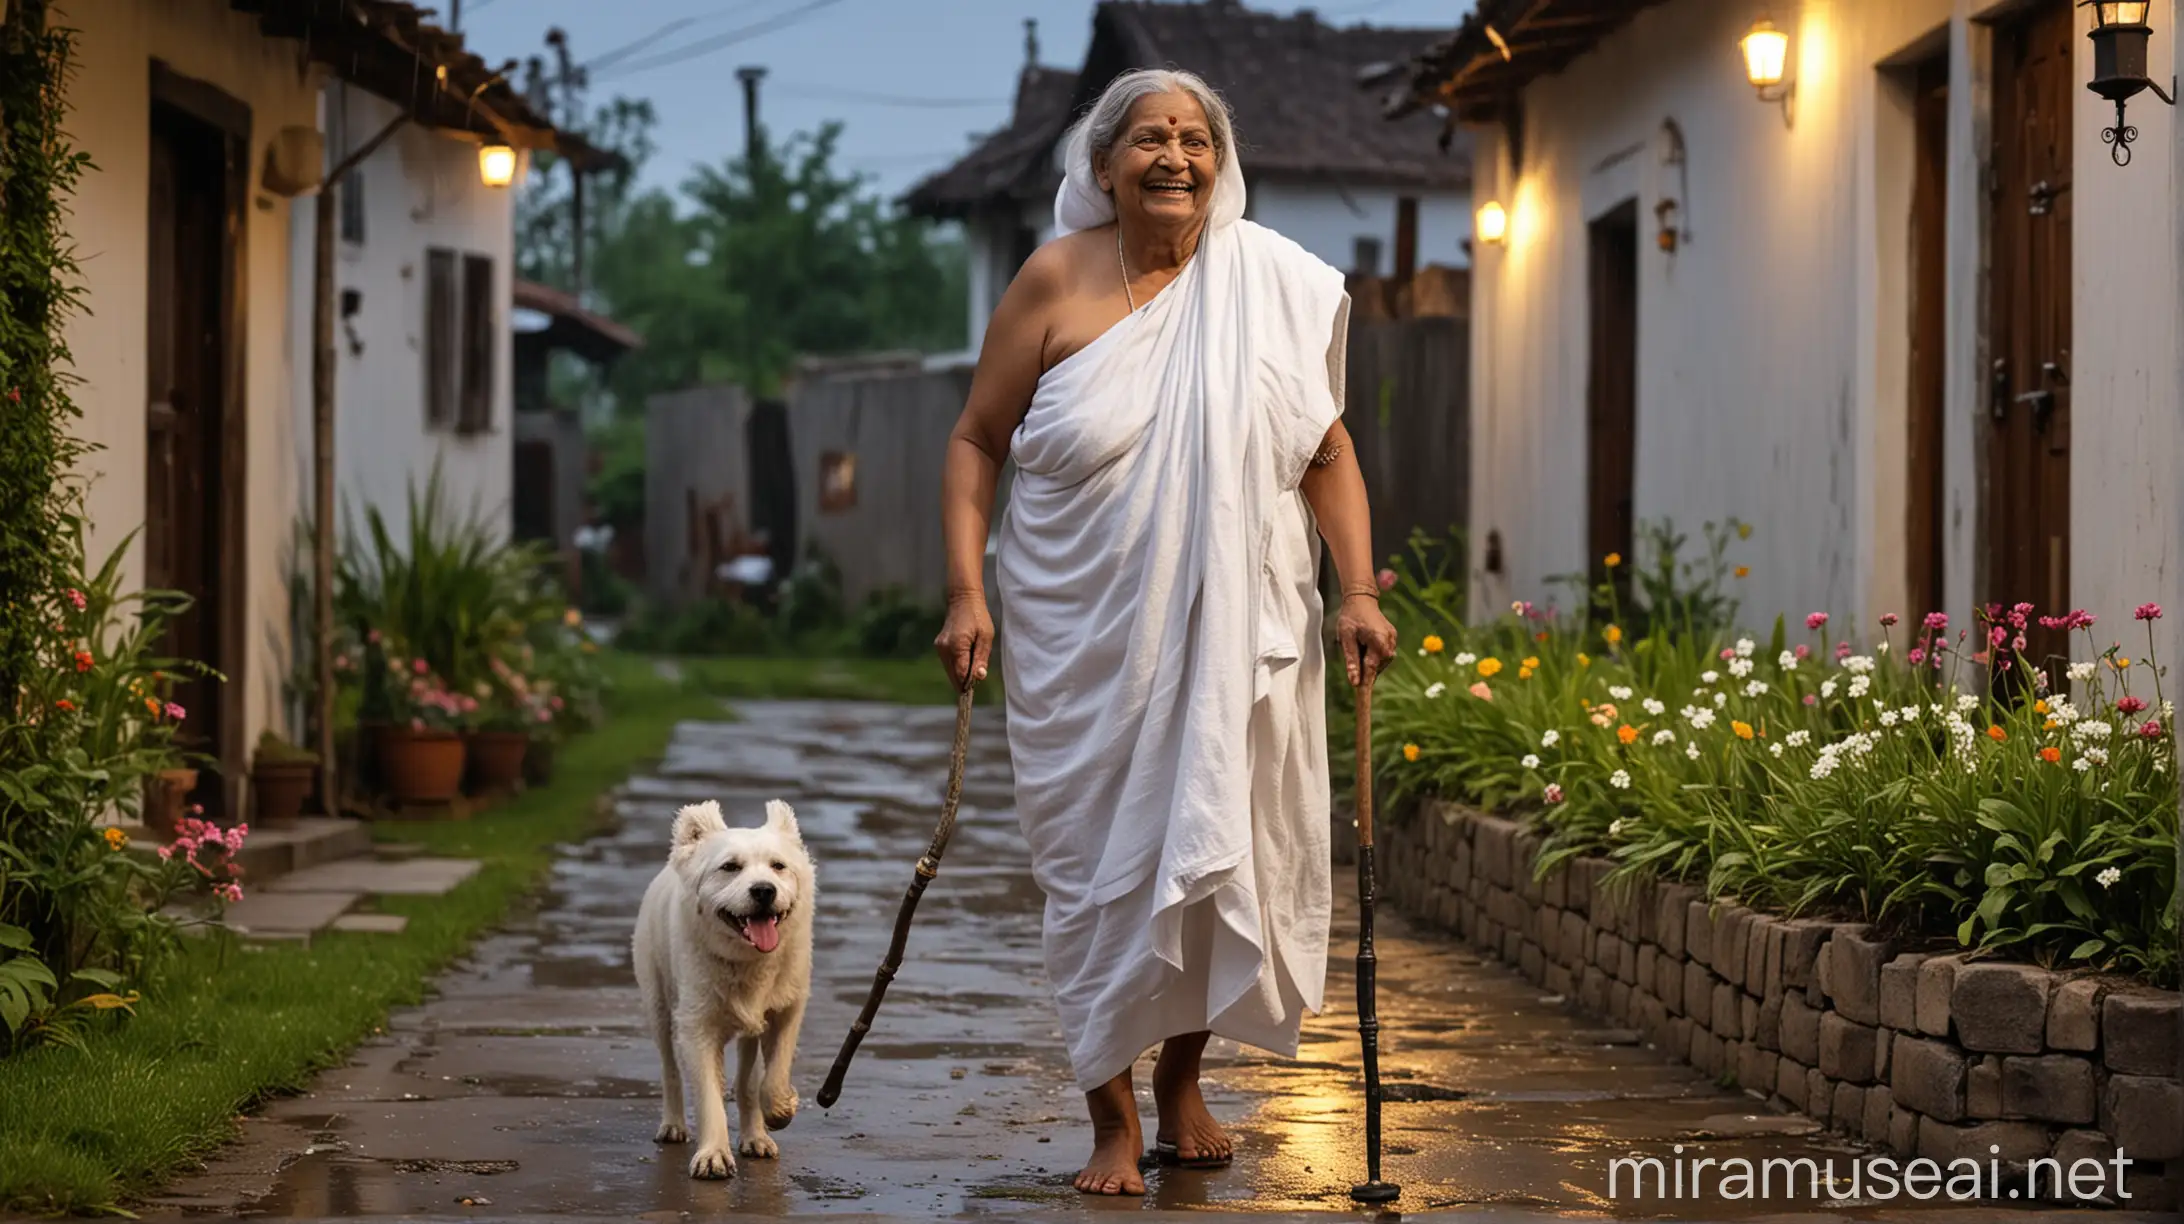 Elderly Indian Woman Walking Joyfully with Dog in Rainy Night Village Scene